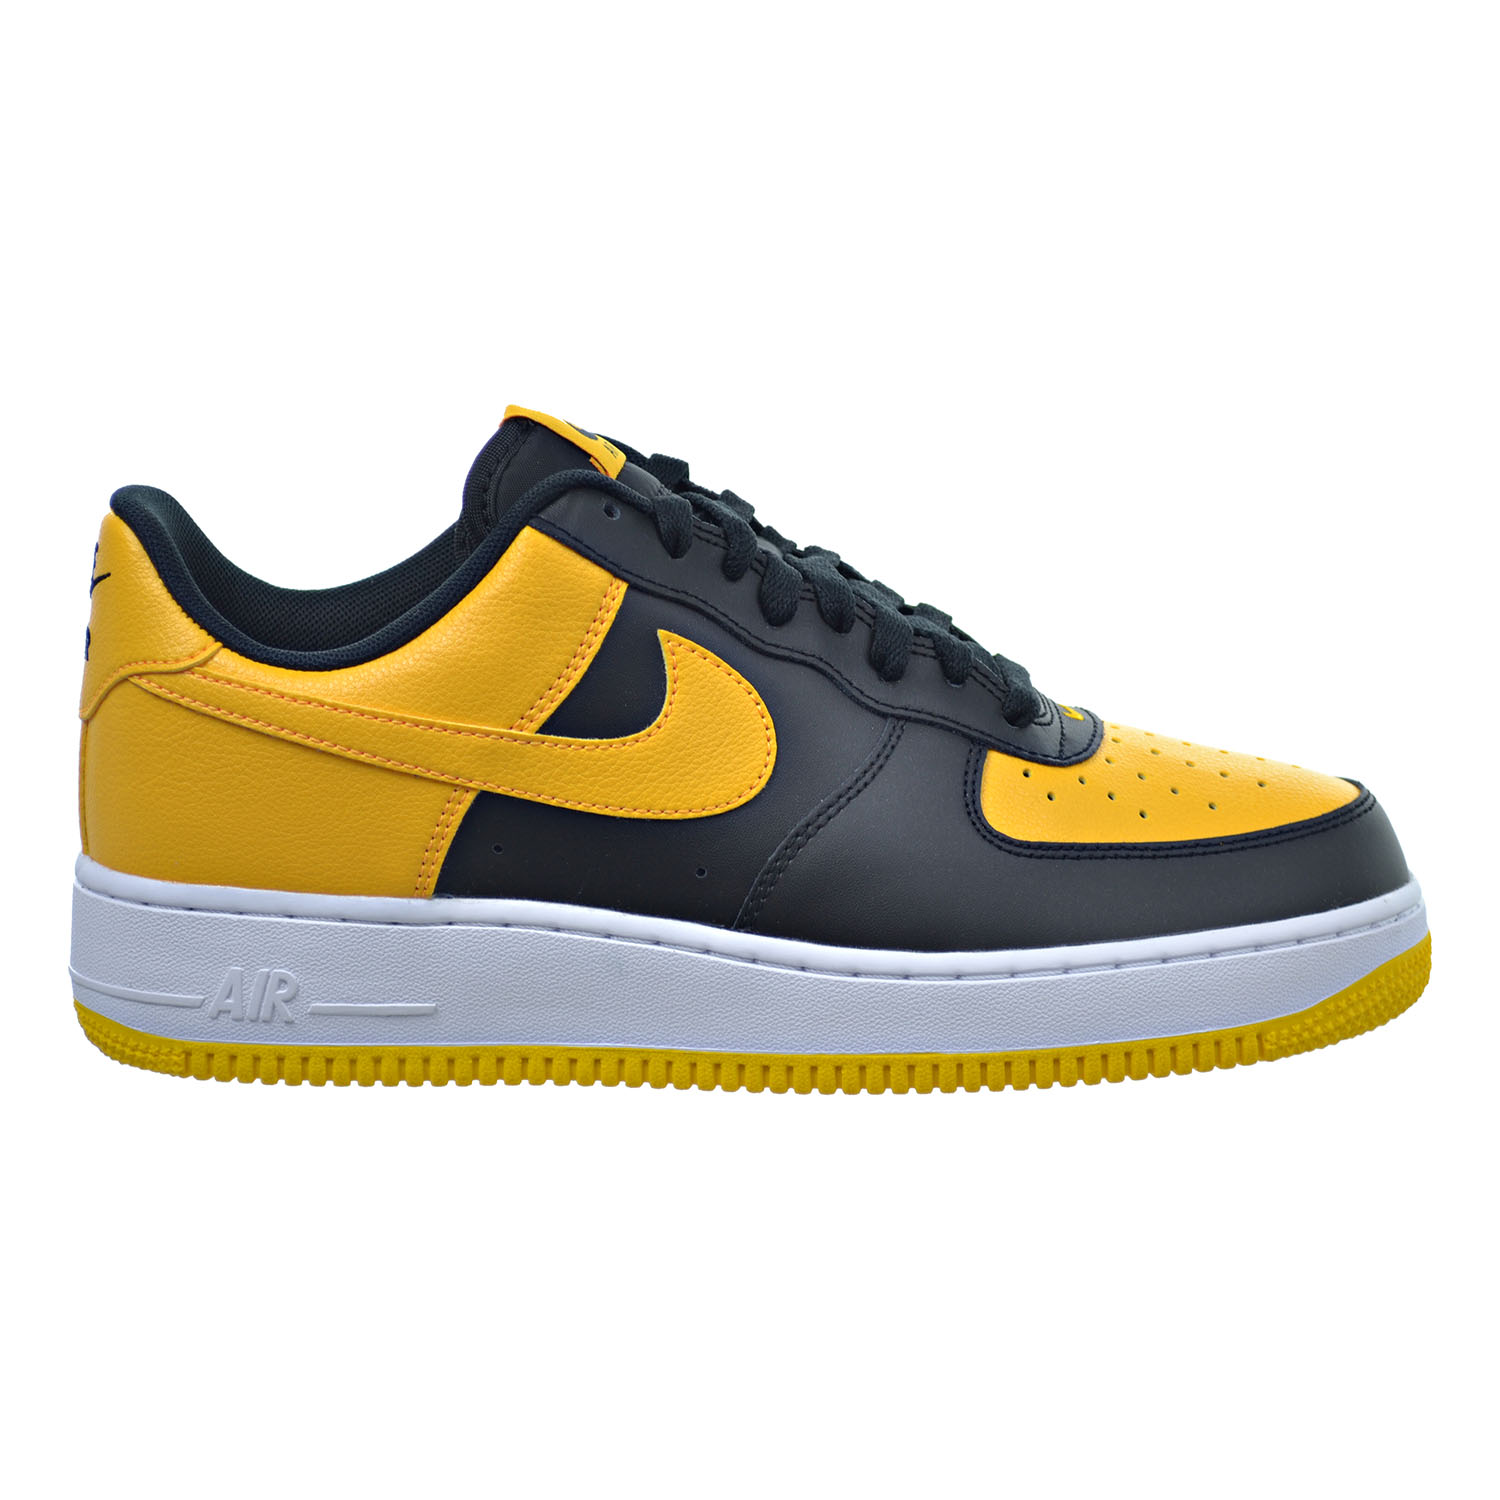 Nike Air Force 1 Men's Shoes Black/University Gold/White 820266-011 | eBay